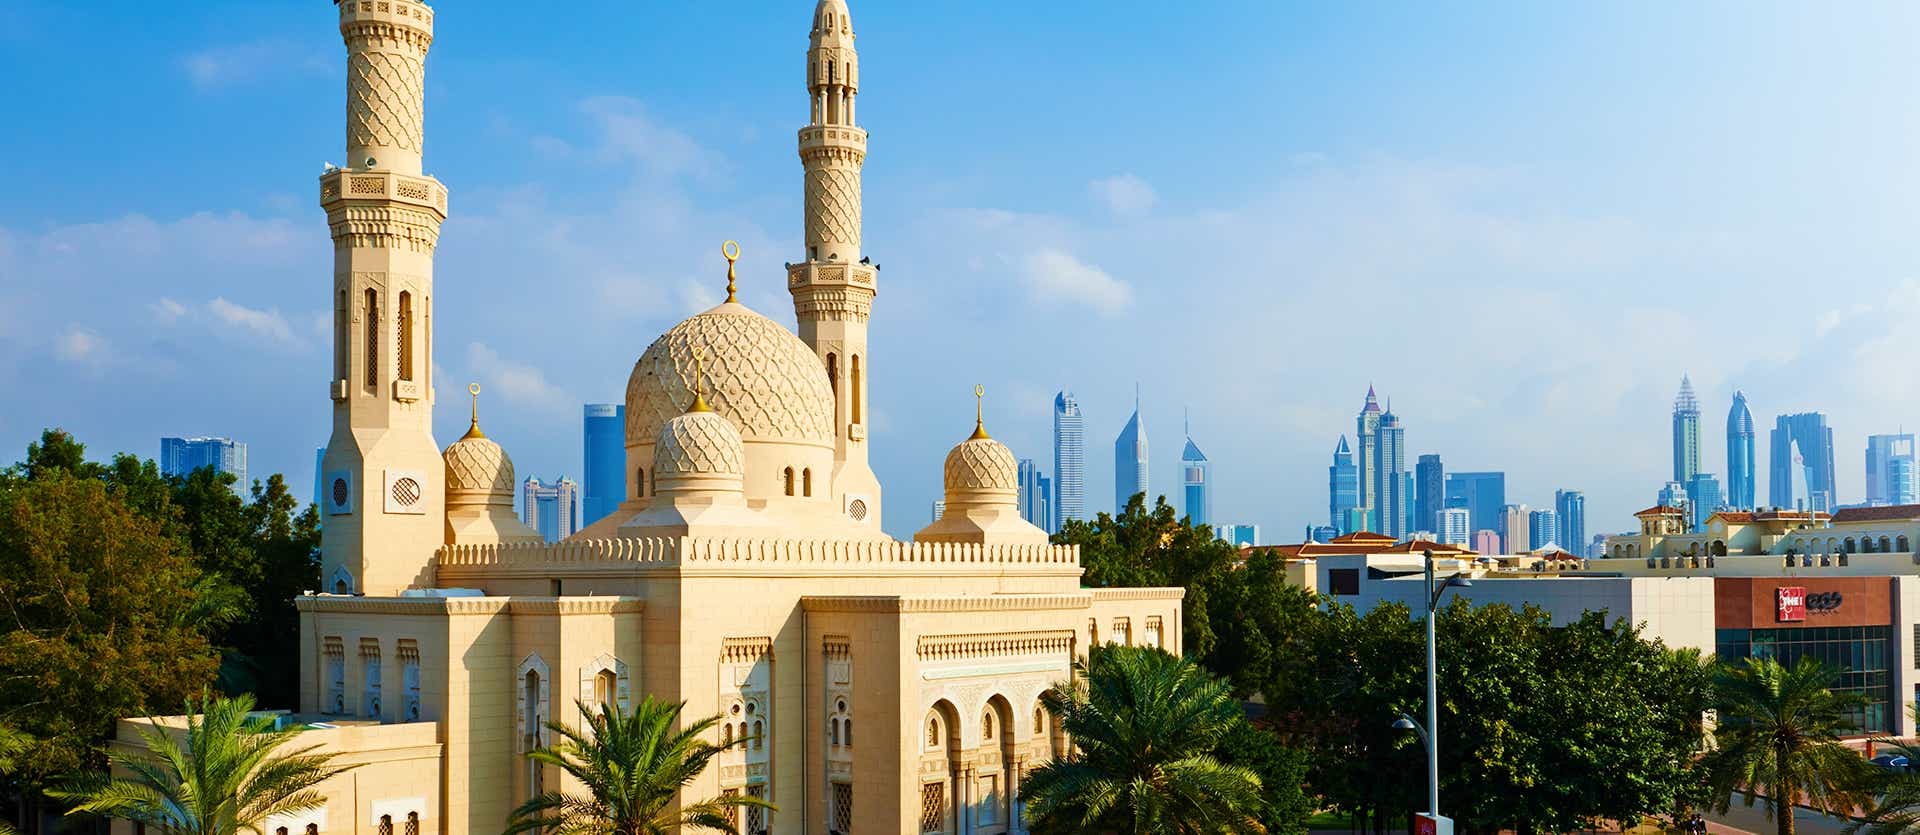 Mezquita de Dubái <span class="iconos separador"></span> Emiratos Árabes Unidos